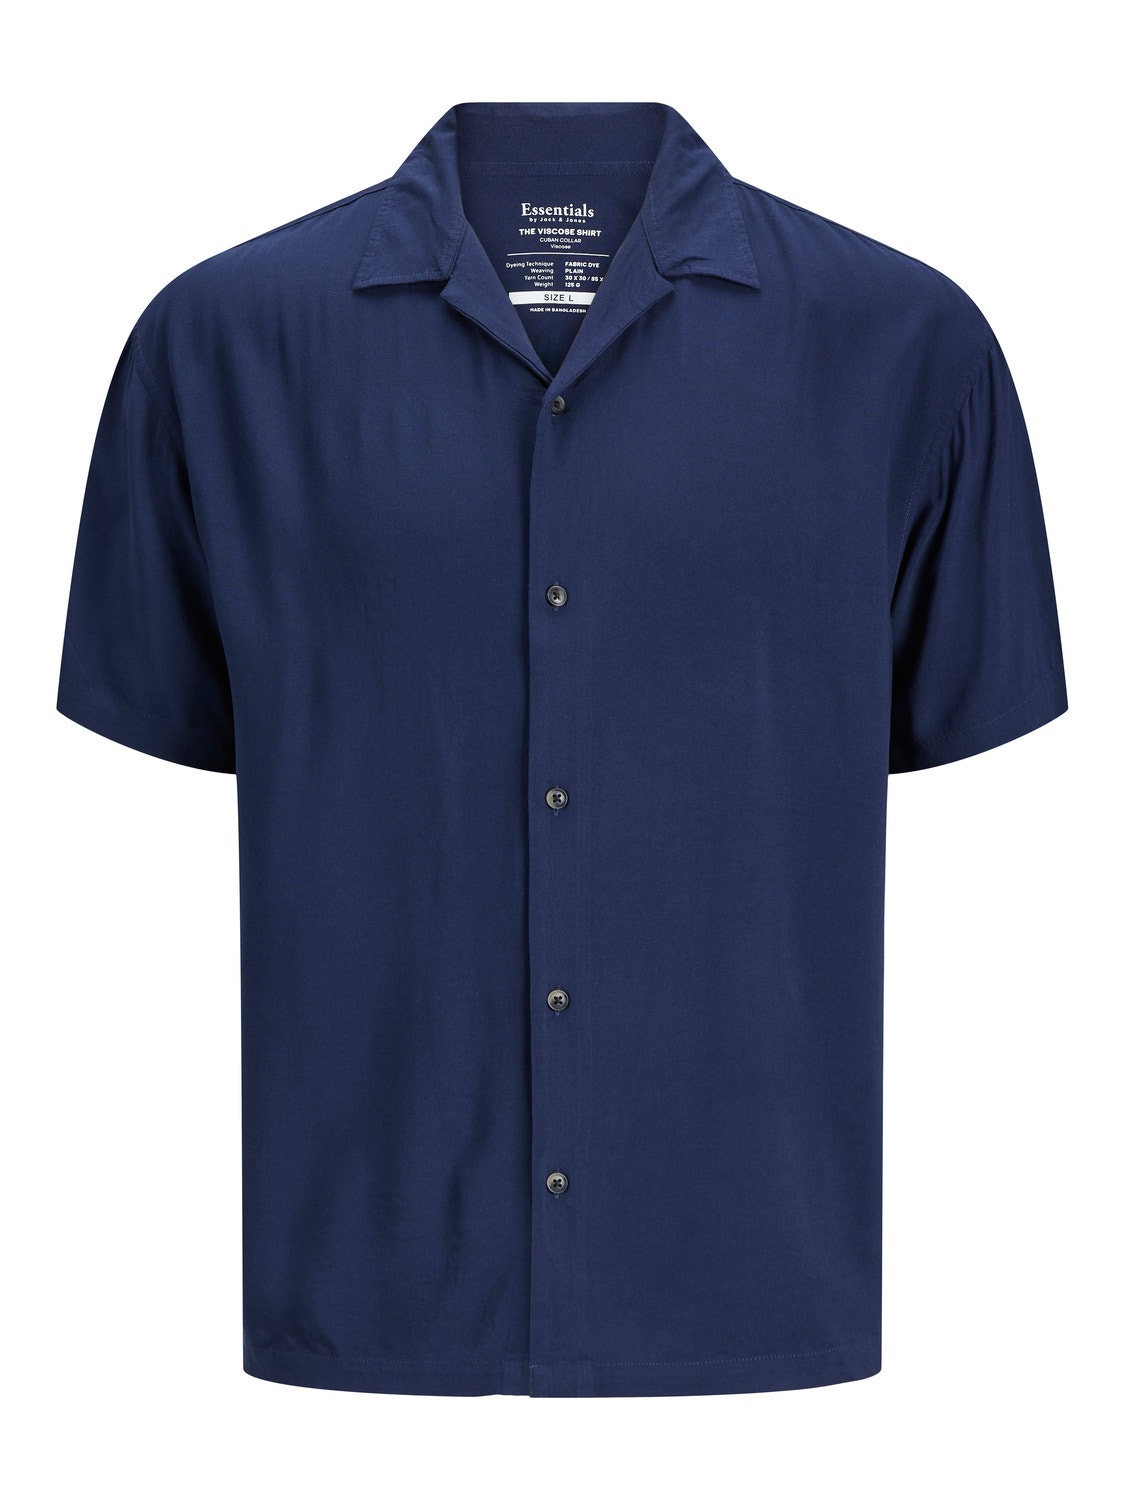 Jack & Jones Plus Size Relaxed Fit Overhemd -Navy Blazer - 12253716